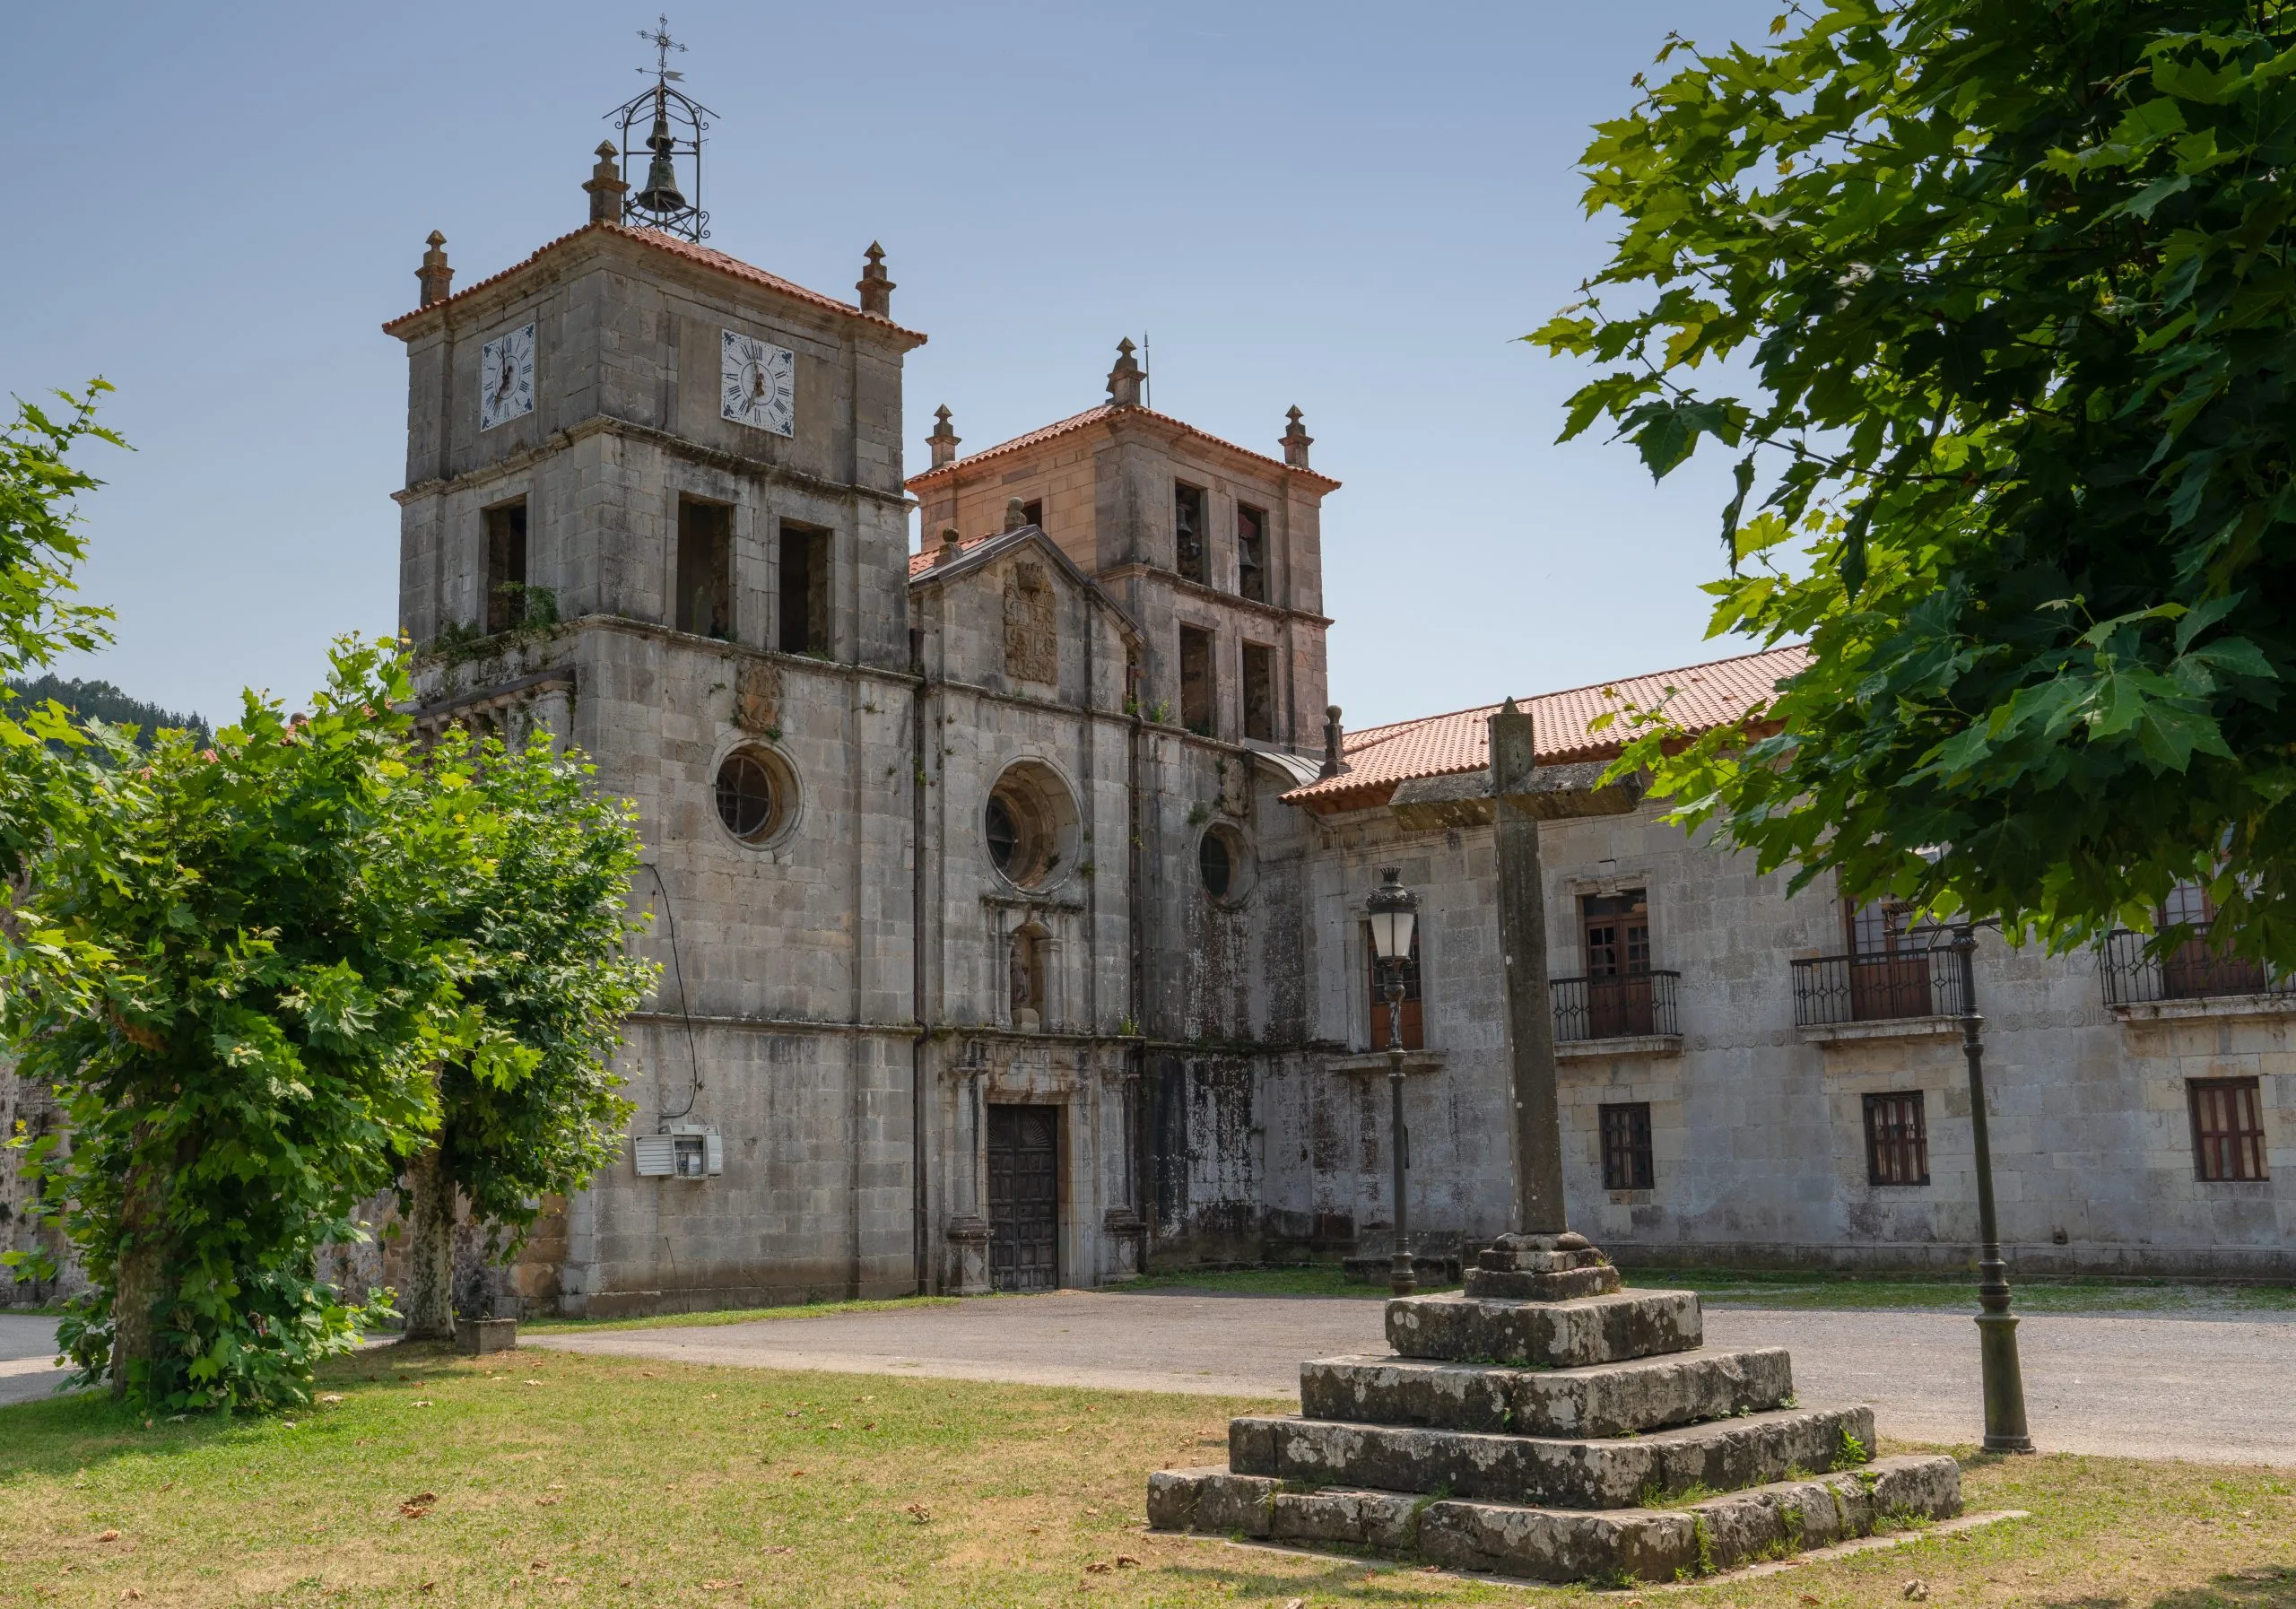 Old monastery of Cornellana, landmark on the Camino de Santiago trail between Grado and Salas, Asturias, Spain